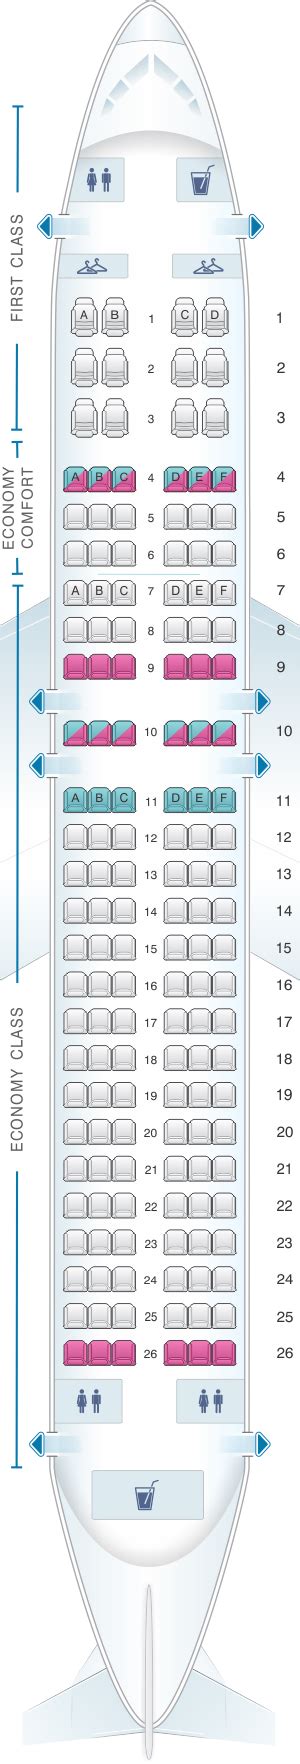 Plan De Cabine Delta Airlines Airbus A320 200 32032r